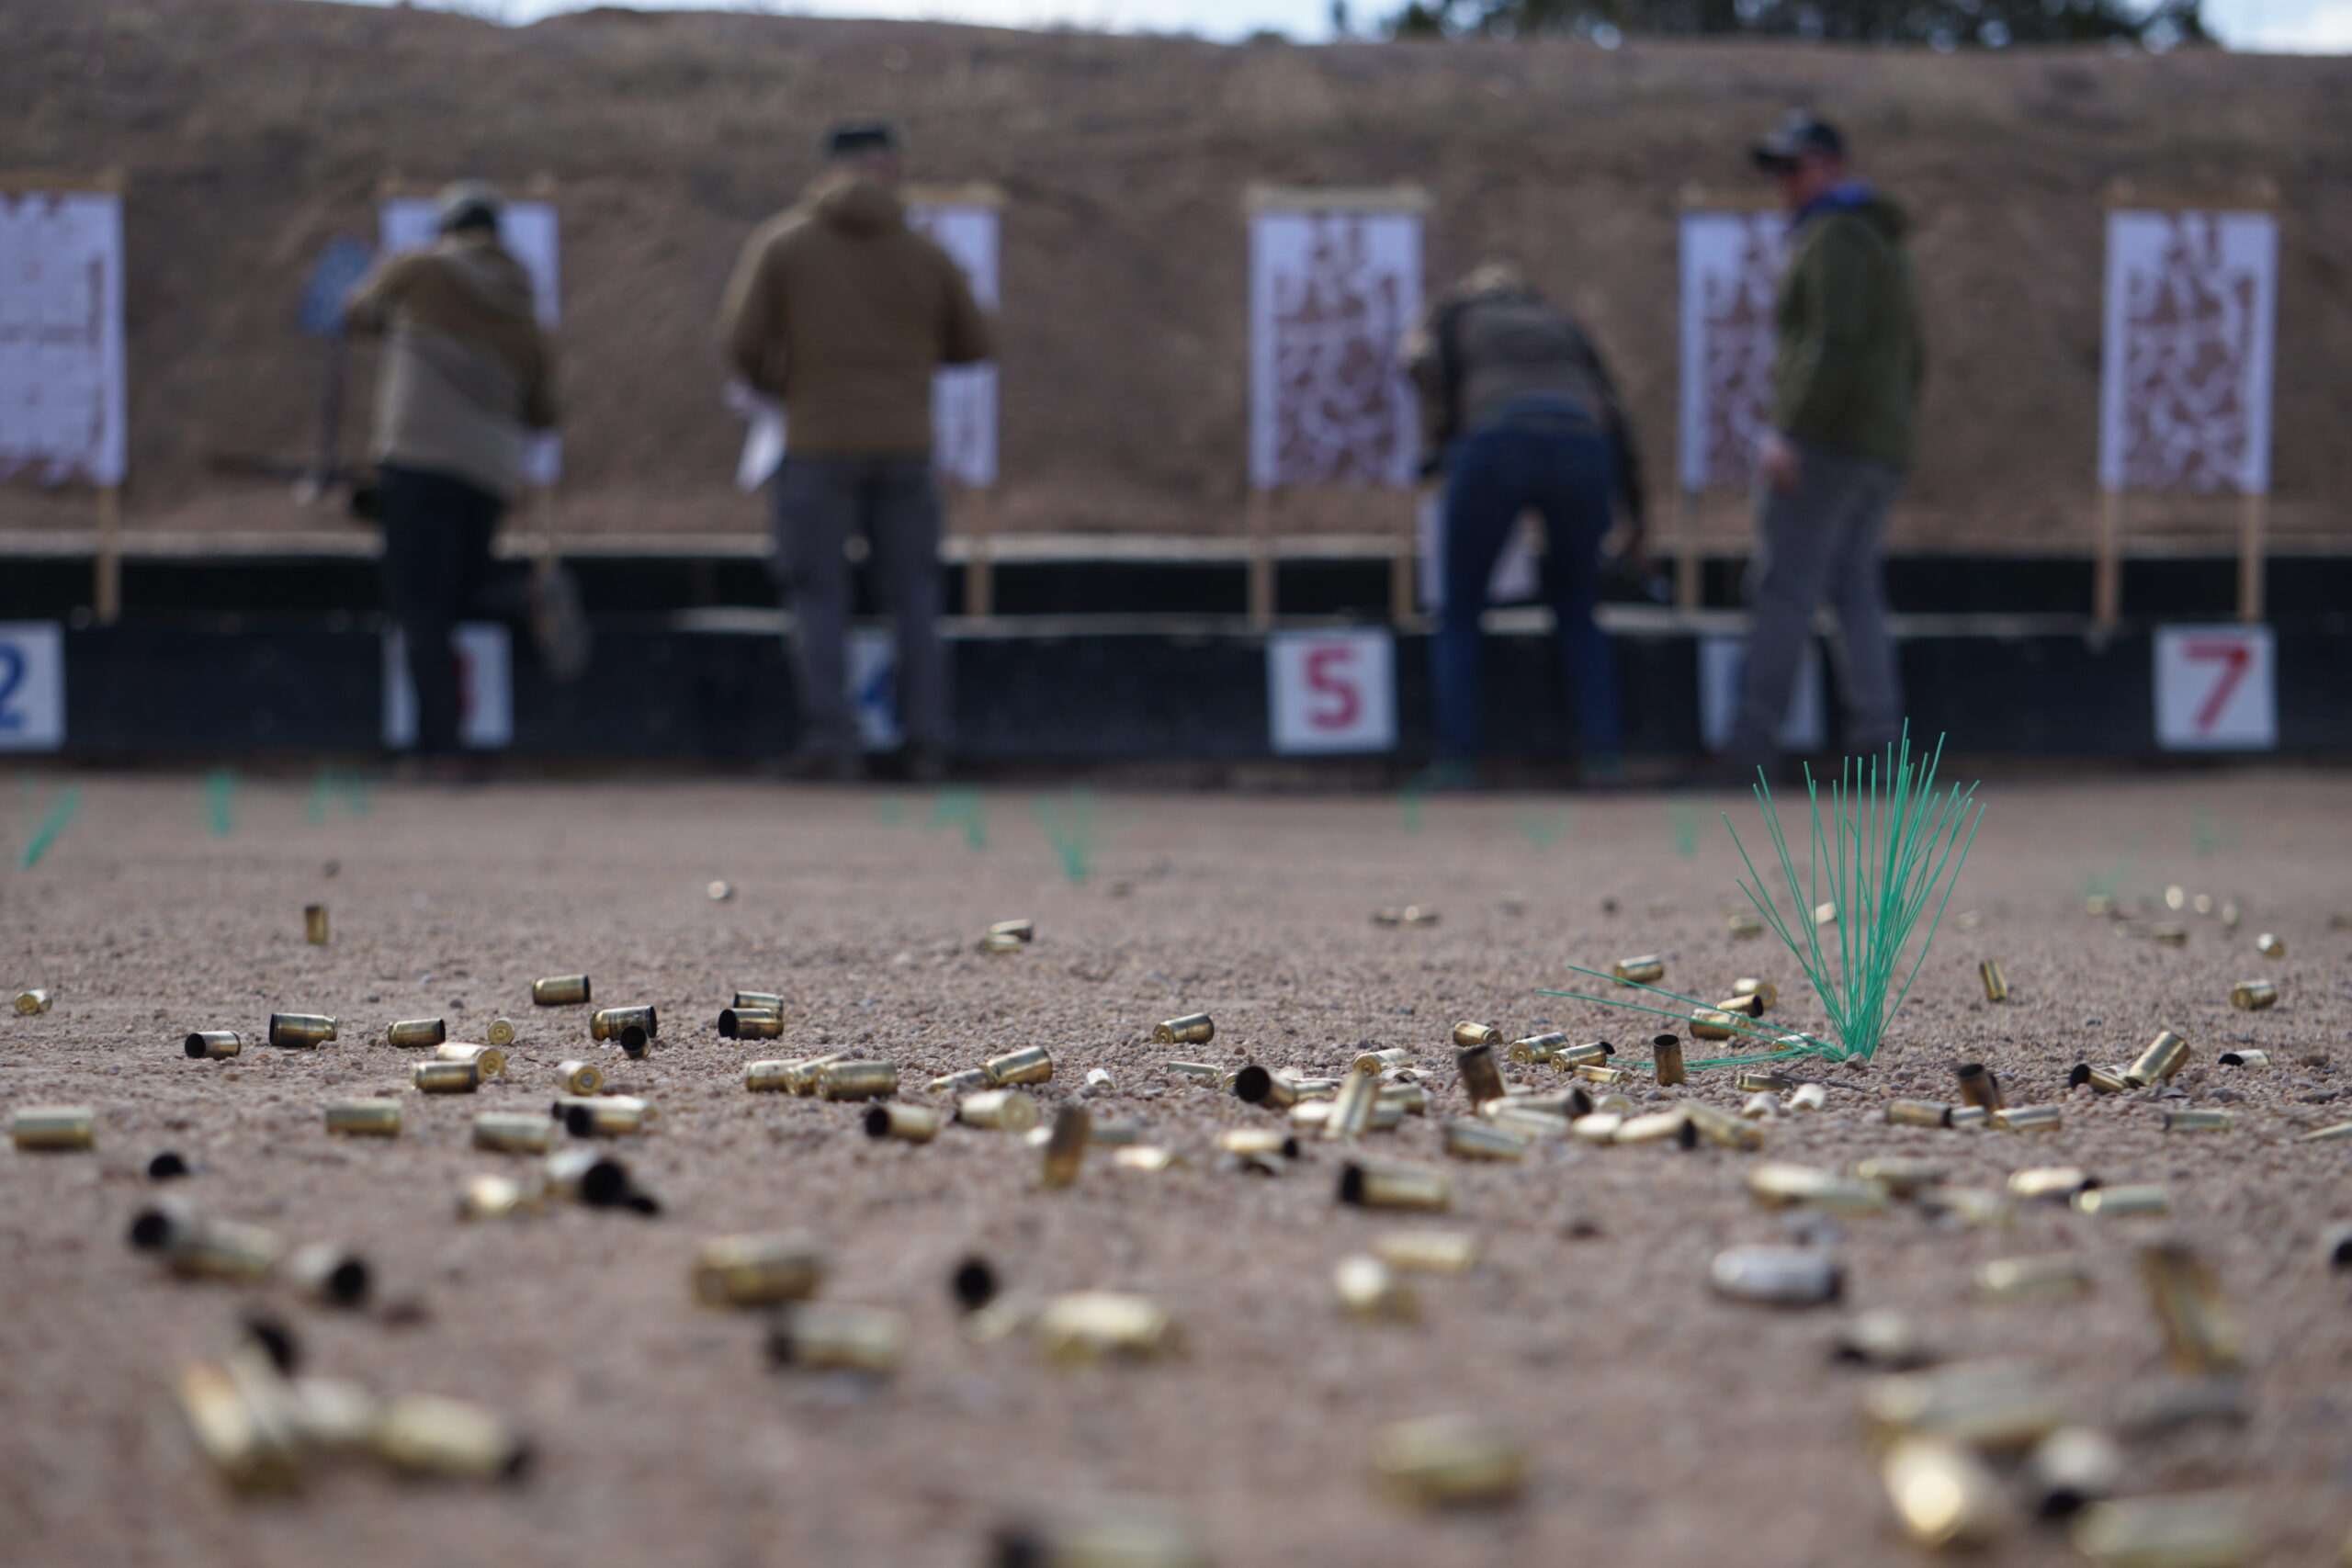 Testers shot over 10,000 rounds through the best handguns